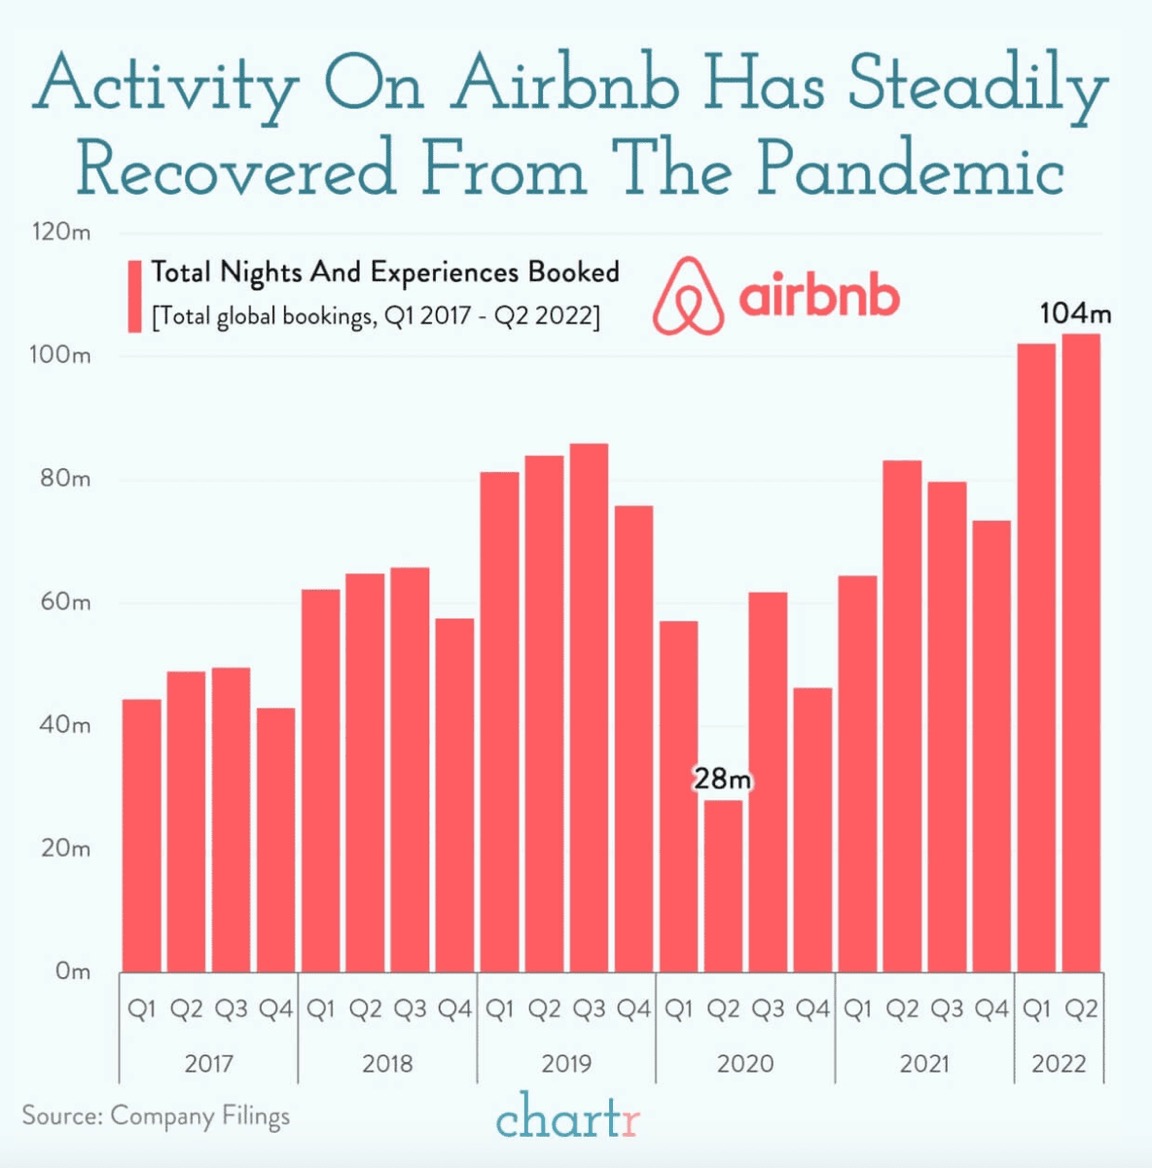 Airbnb增长